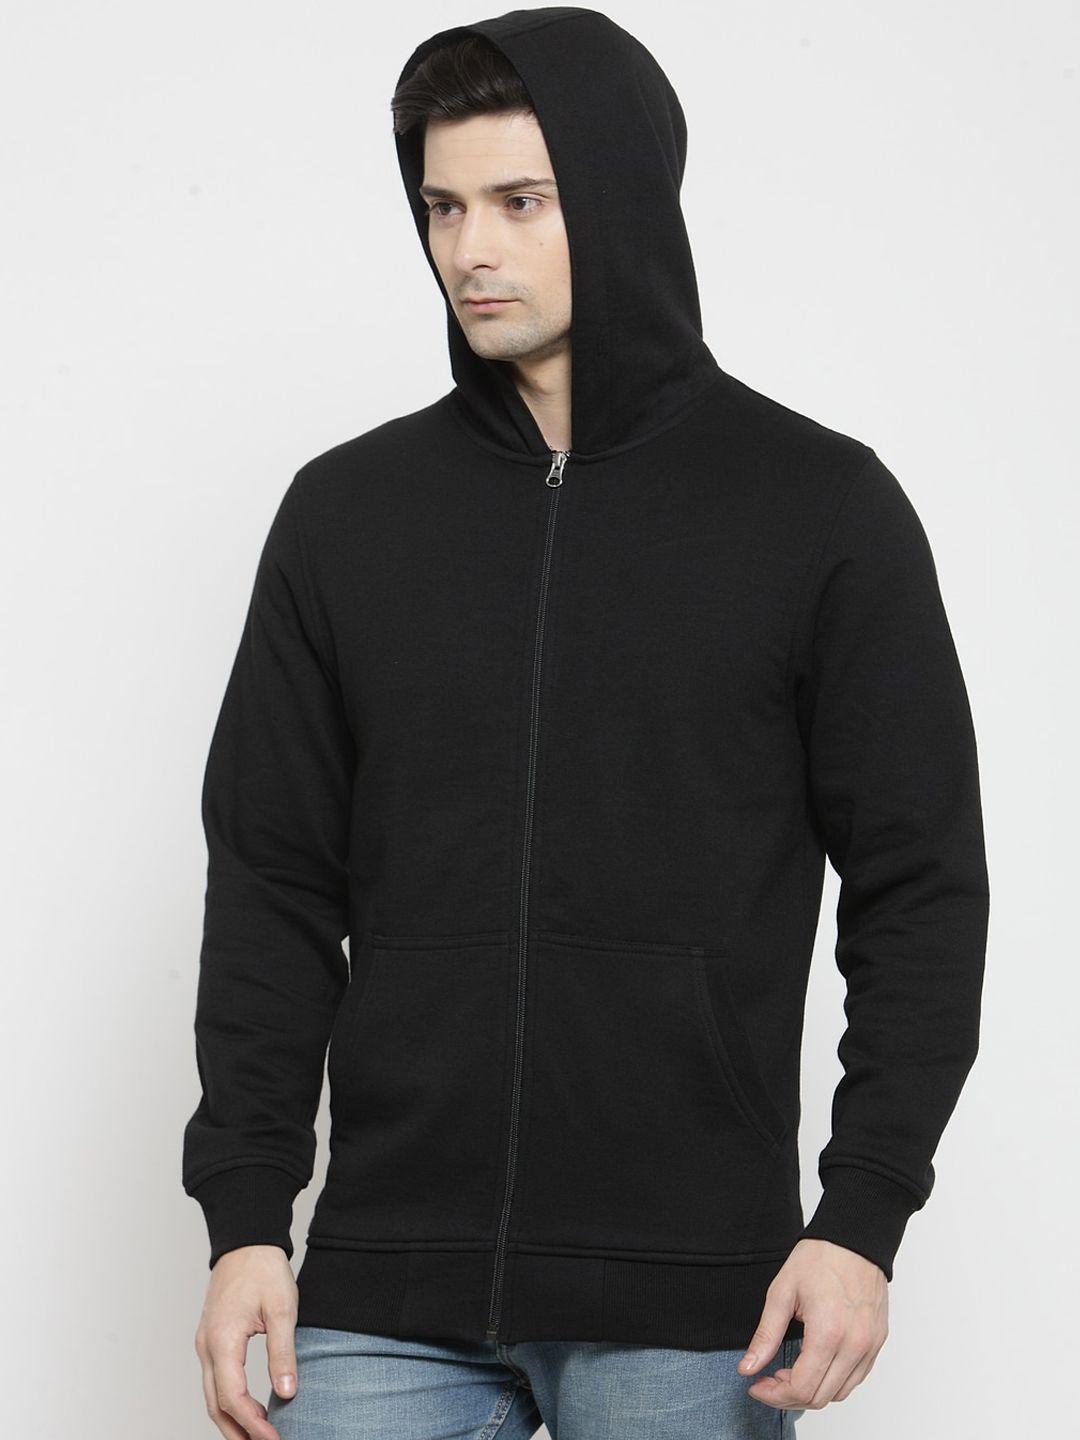 kalt-men-black-solid-hooded-sweatshirt